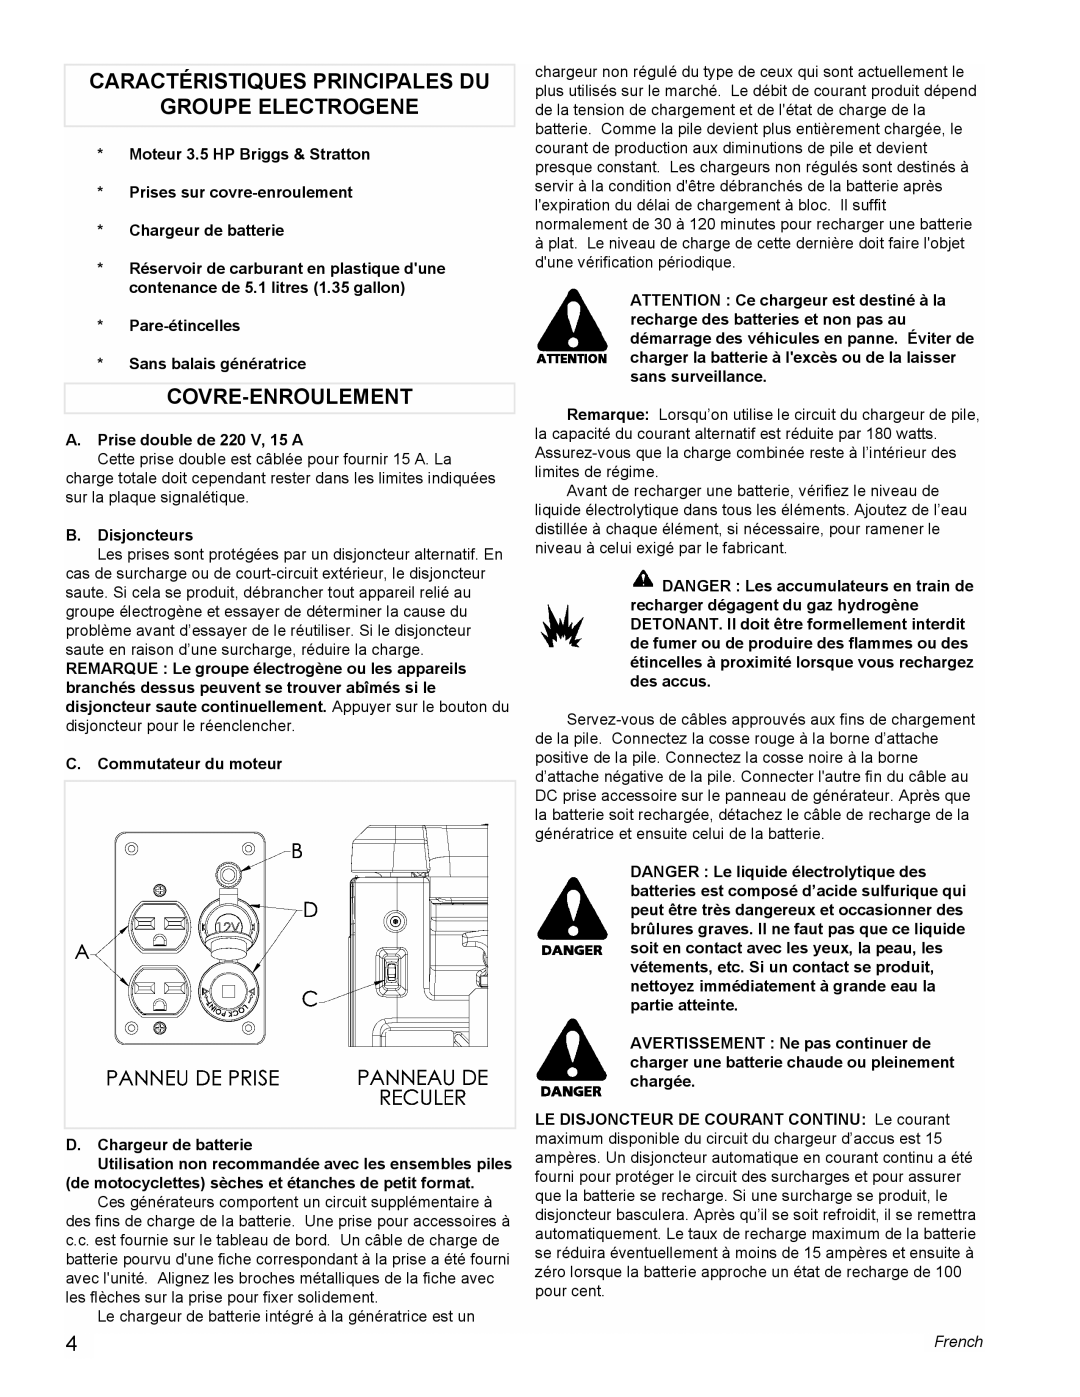 Powermate PE0401853 manual Caractéristiques Principales Du Groupe Electrogene, Covre-Enroulement, French 